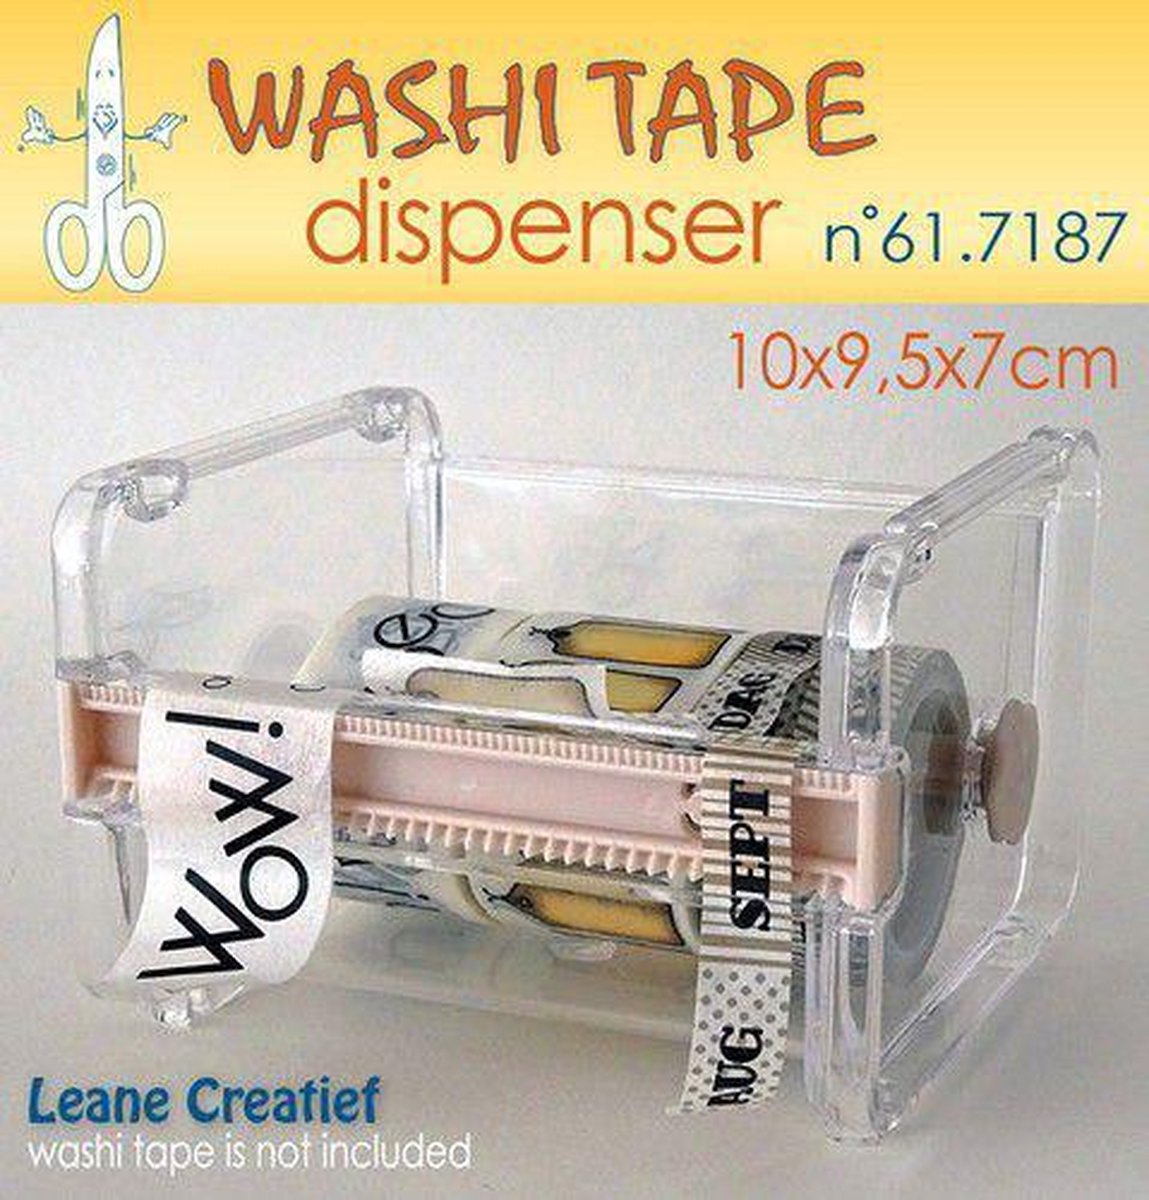 Washi tape dispenser